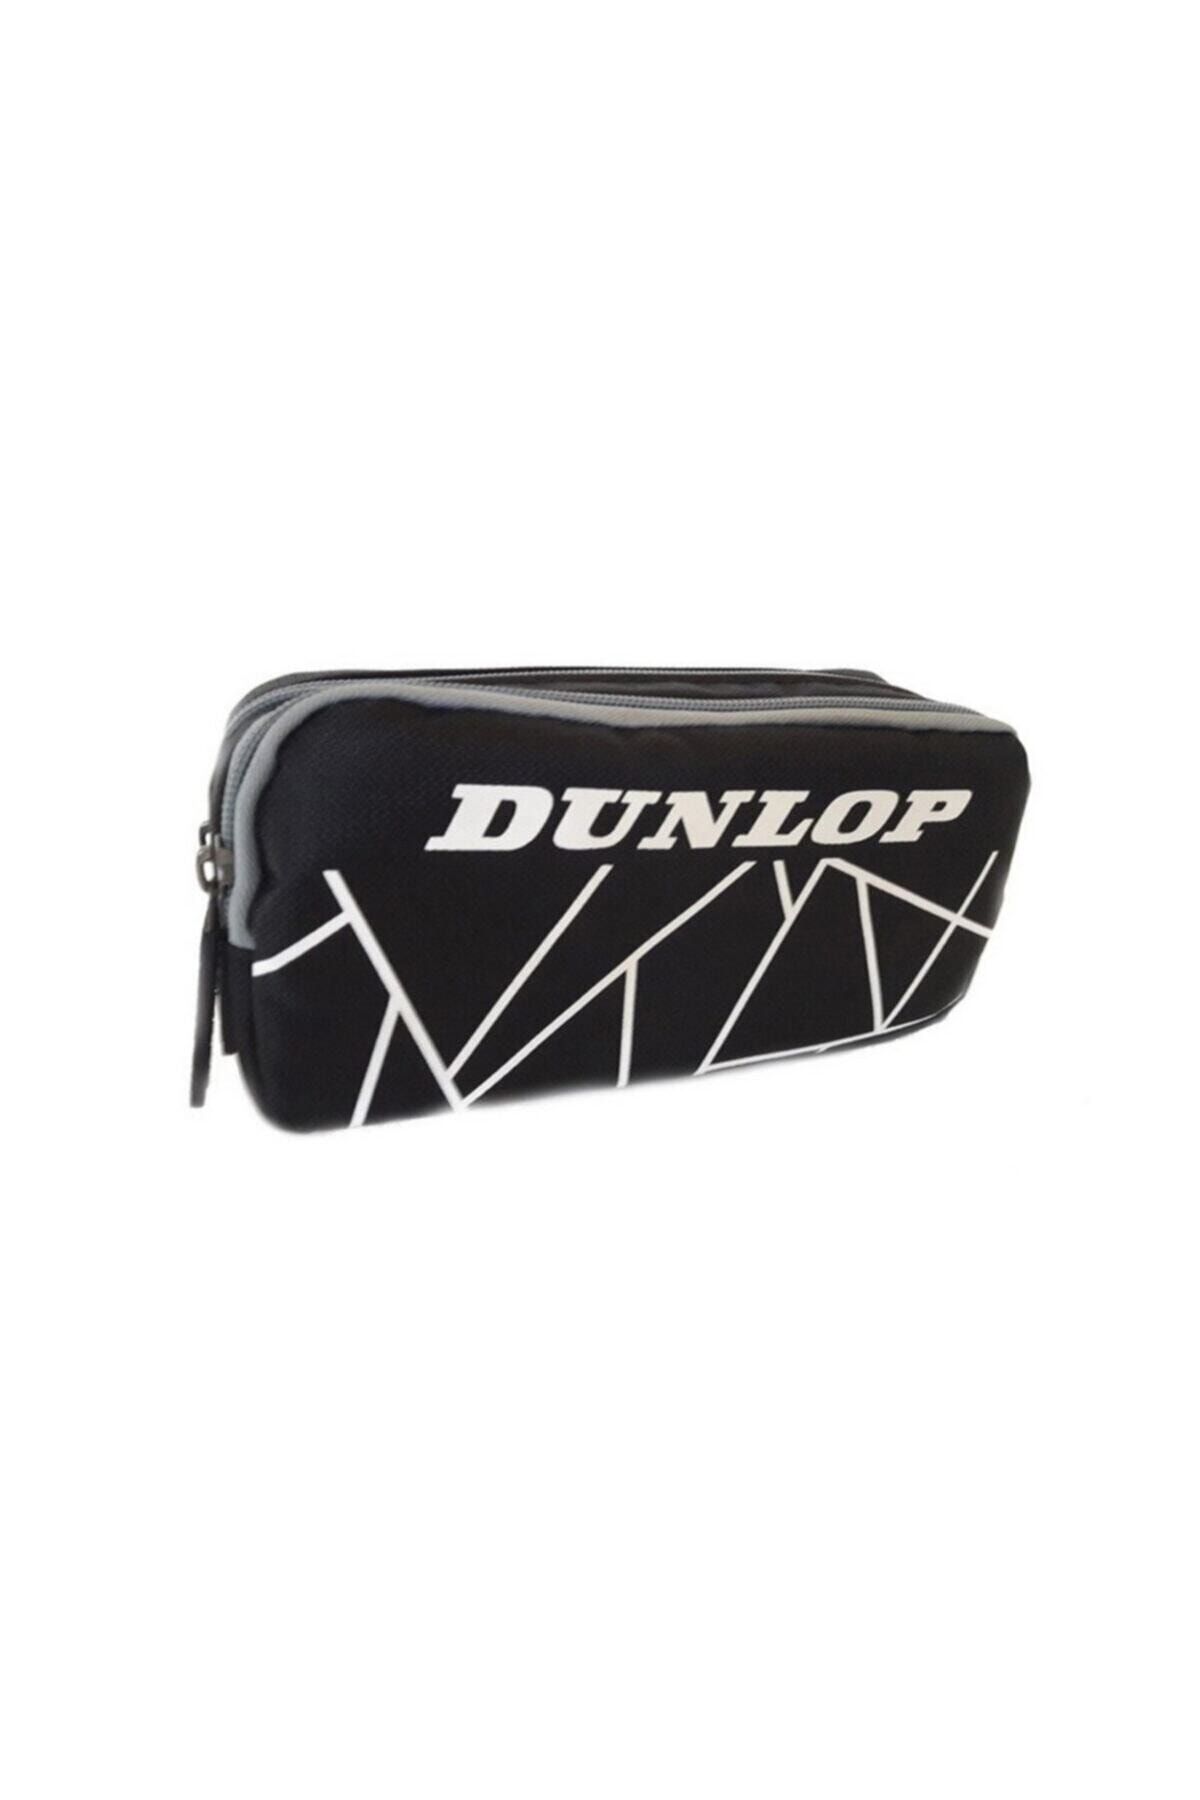 Dunlop Kalem Kutusu 21x10x6 Cm (Dpklk20524)